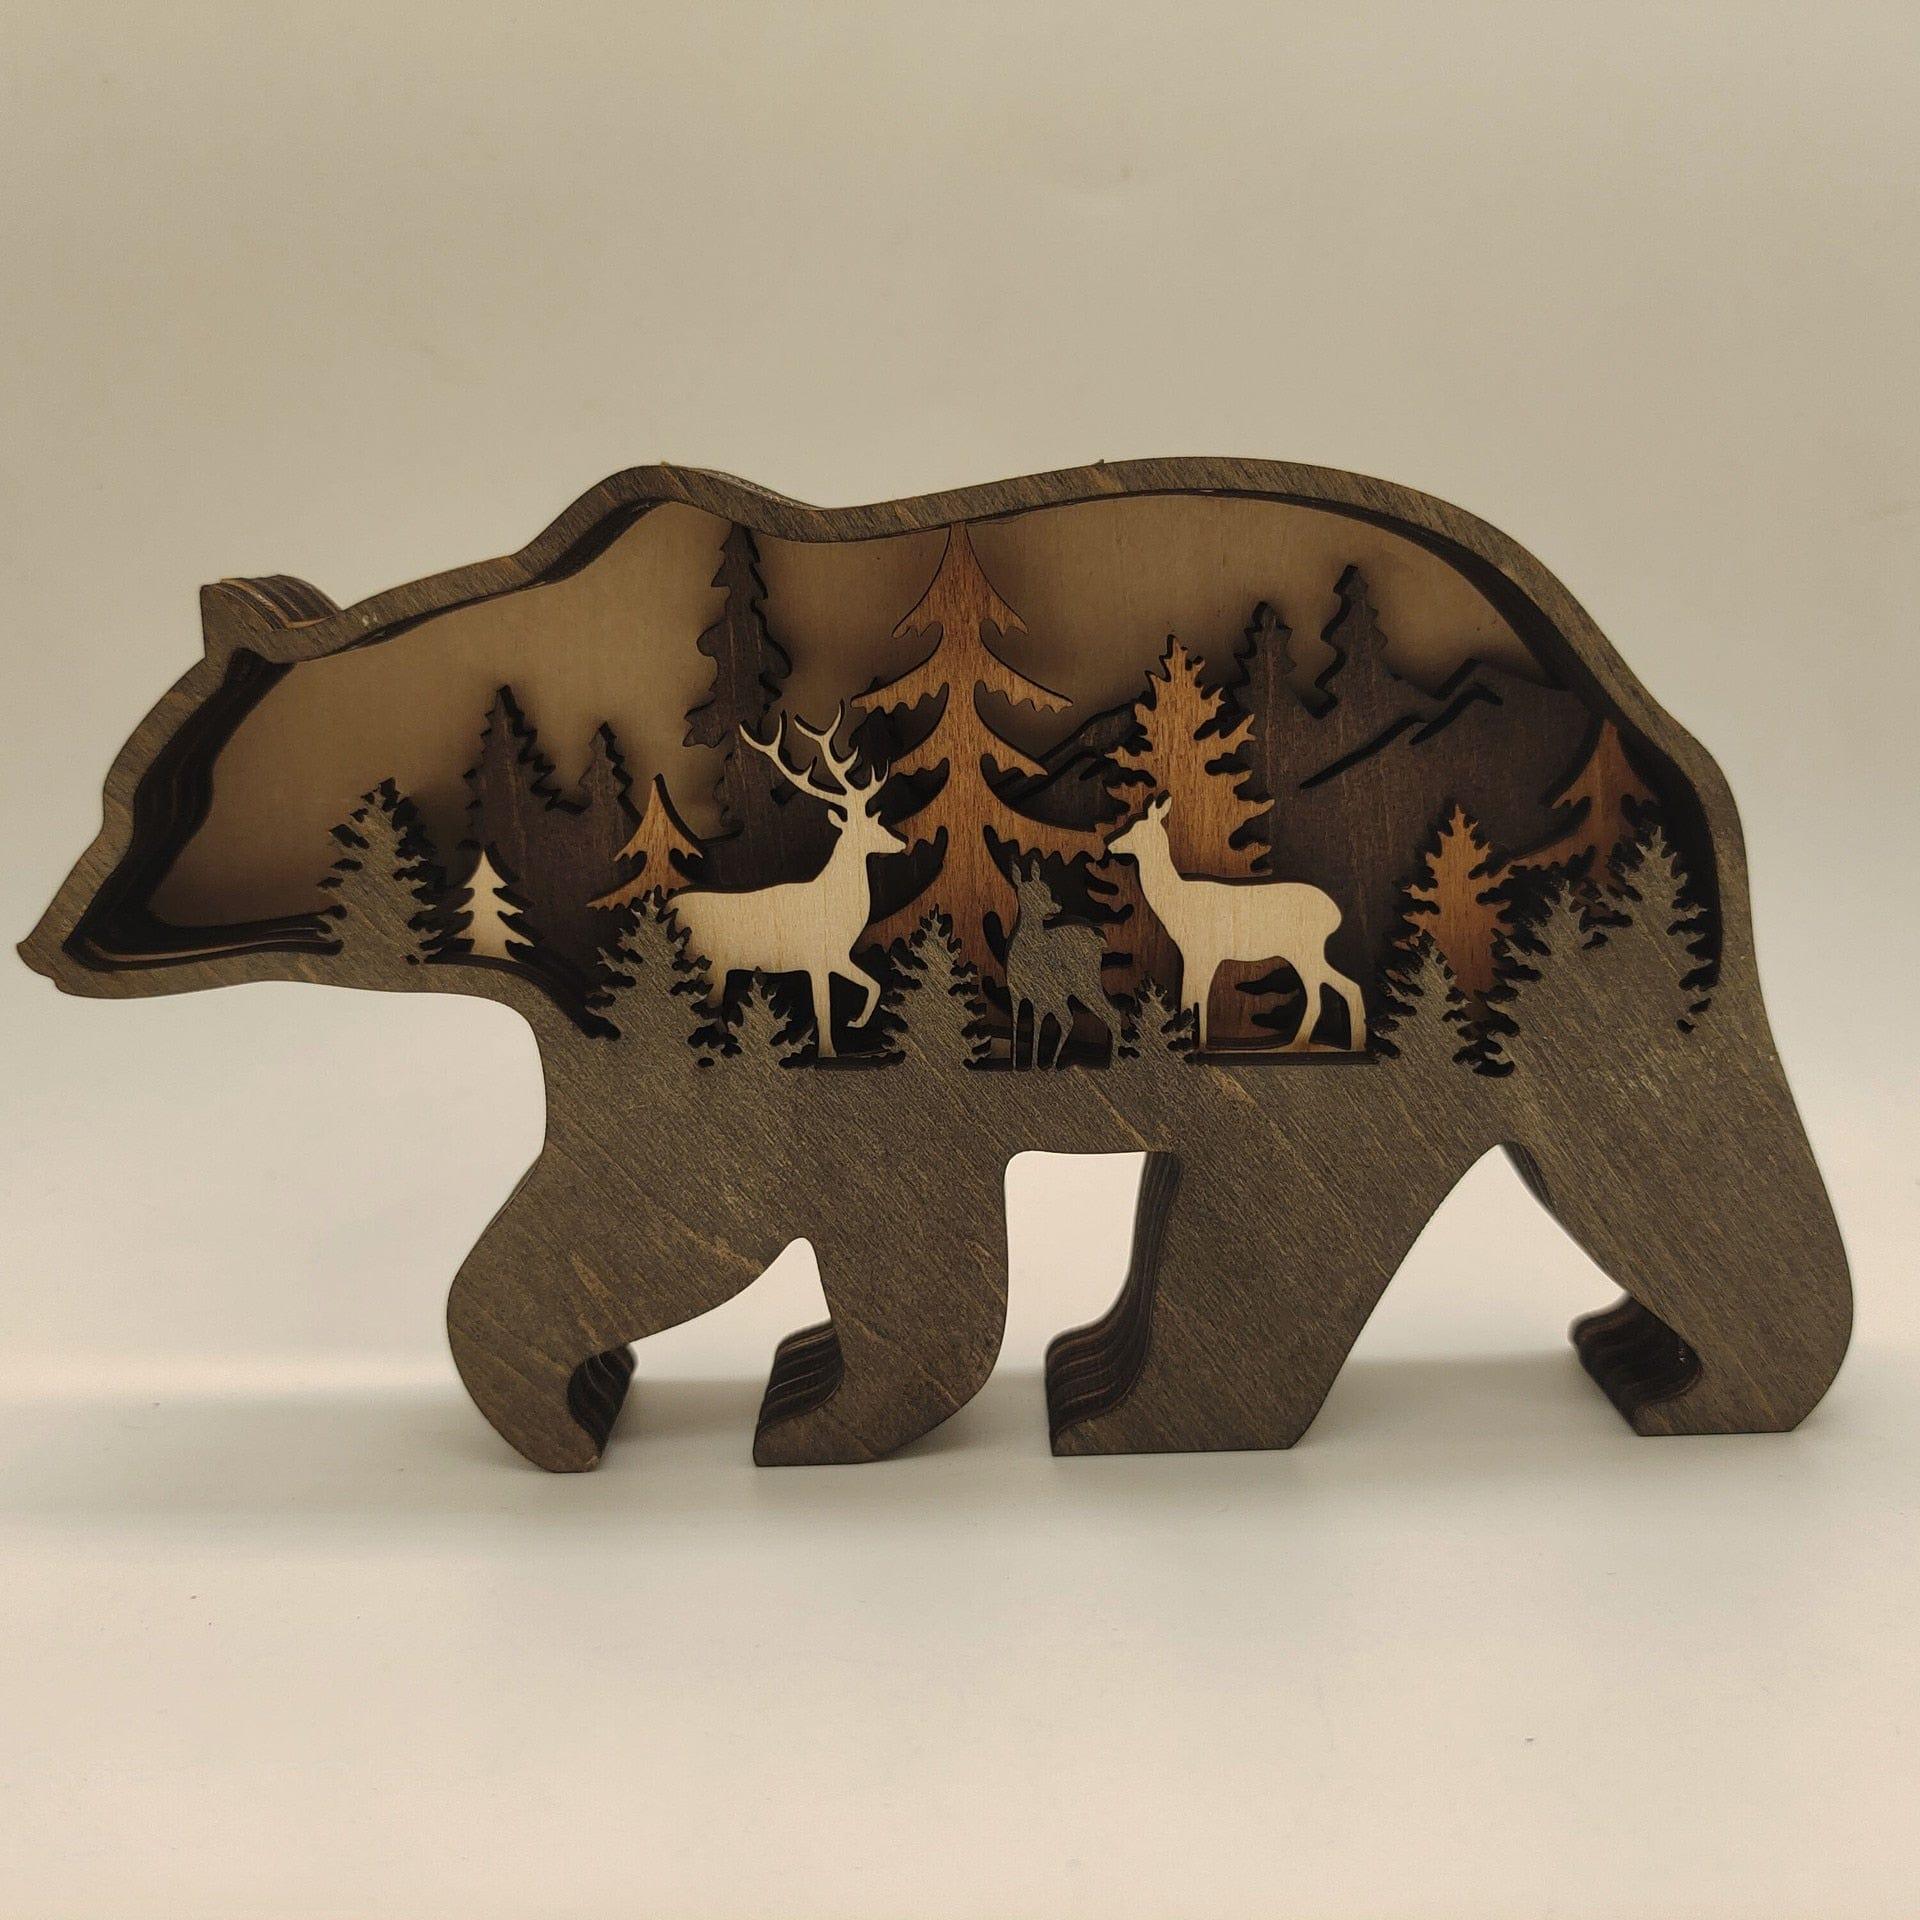 Shop 0 bear 2021 Animal Bears Craft Figurine Desktop Table Ornament Carving Deer Model Creative Home Office Decoration Sculpture Mademoiselle Home Decor